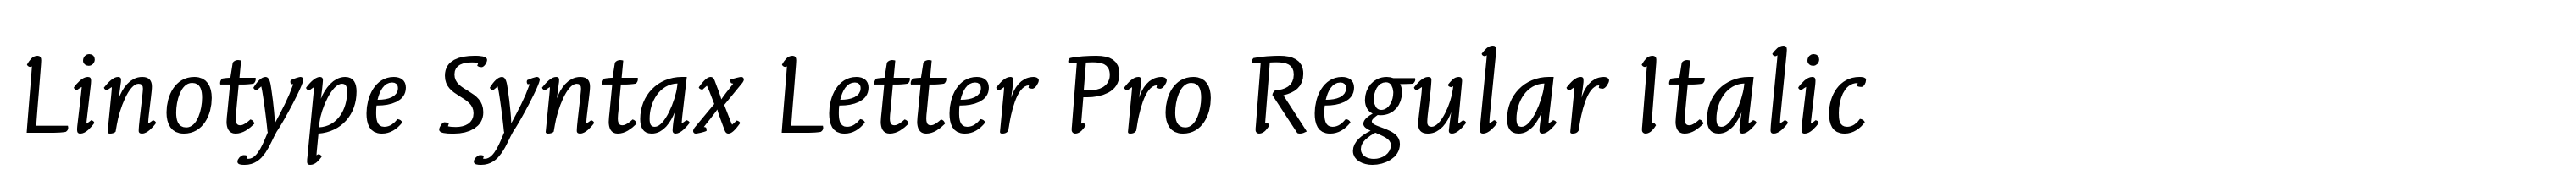 Linotype Syntax Letter Pro Regular Italic